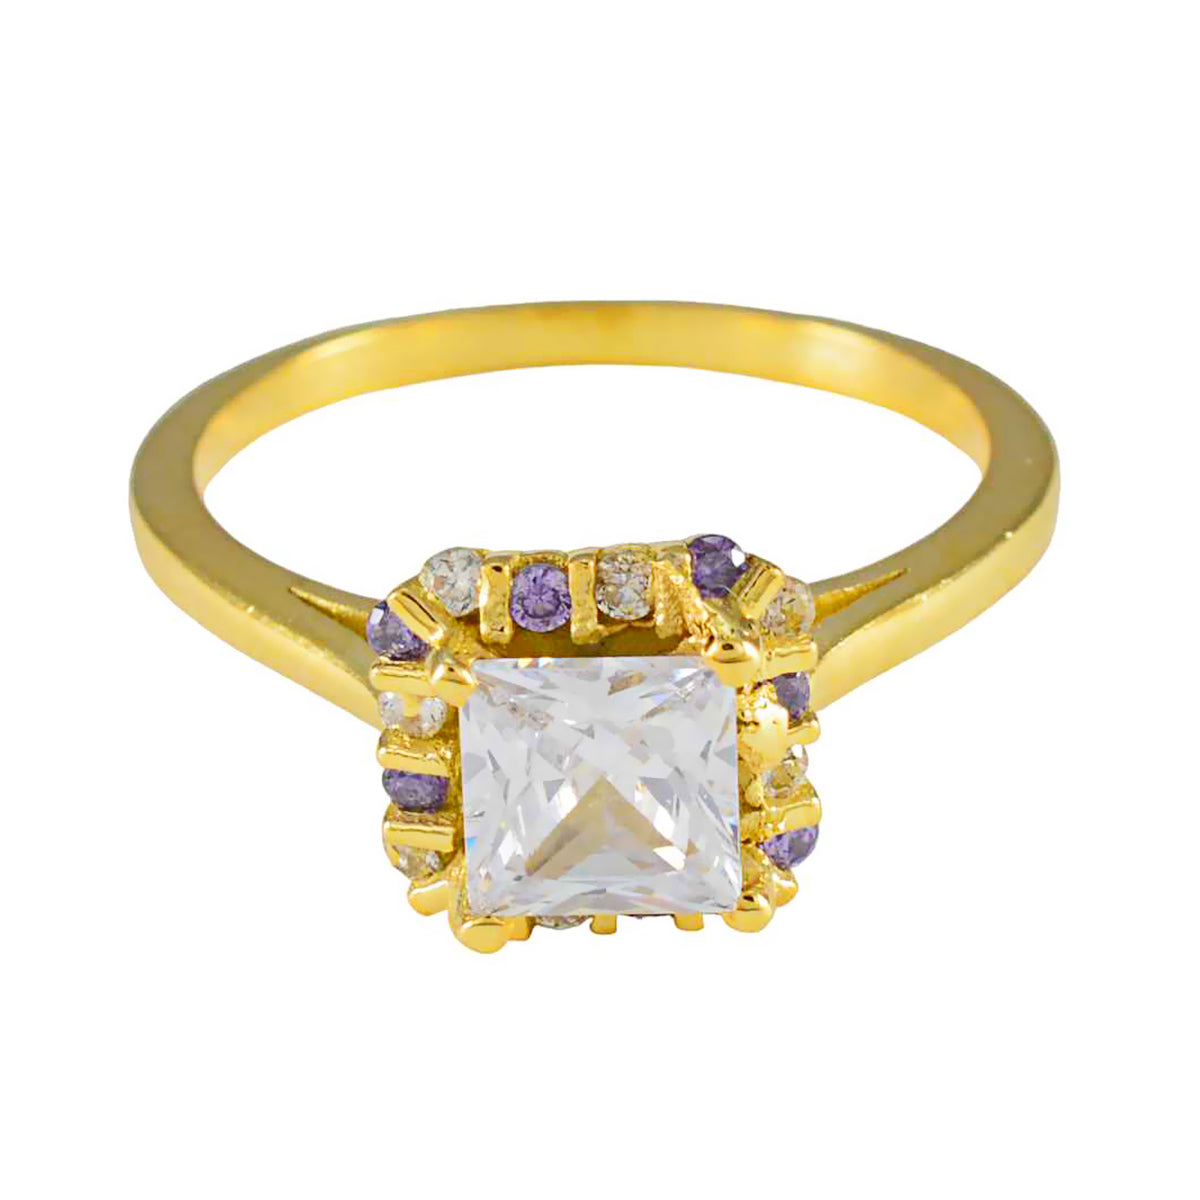 Riyo Elegant Silver Ring With Yellow Gold Plating Amethyst Stone square Shape Prong Setting Handamde Jewelry Wedding Ring